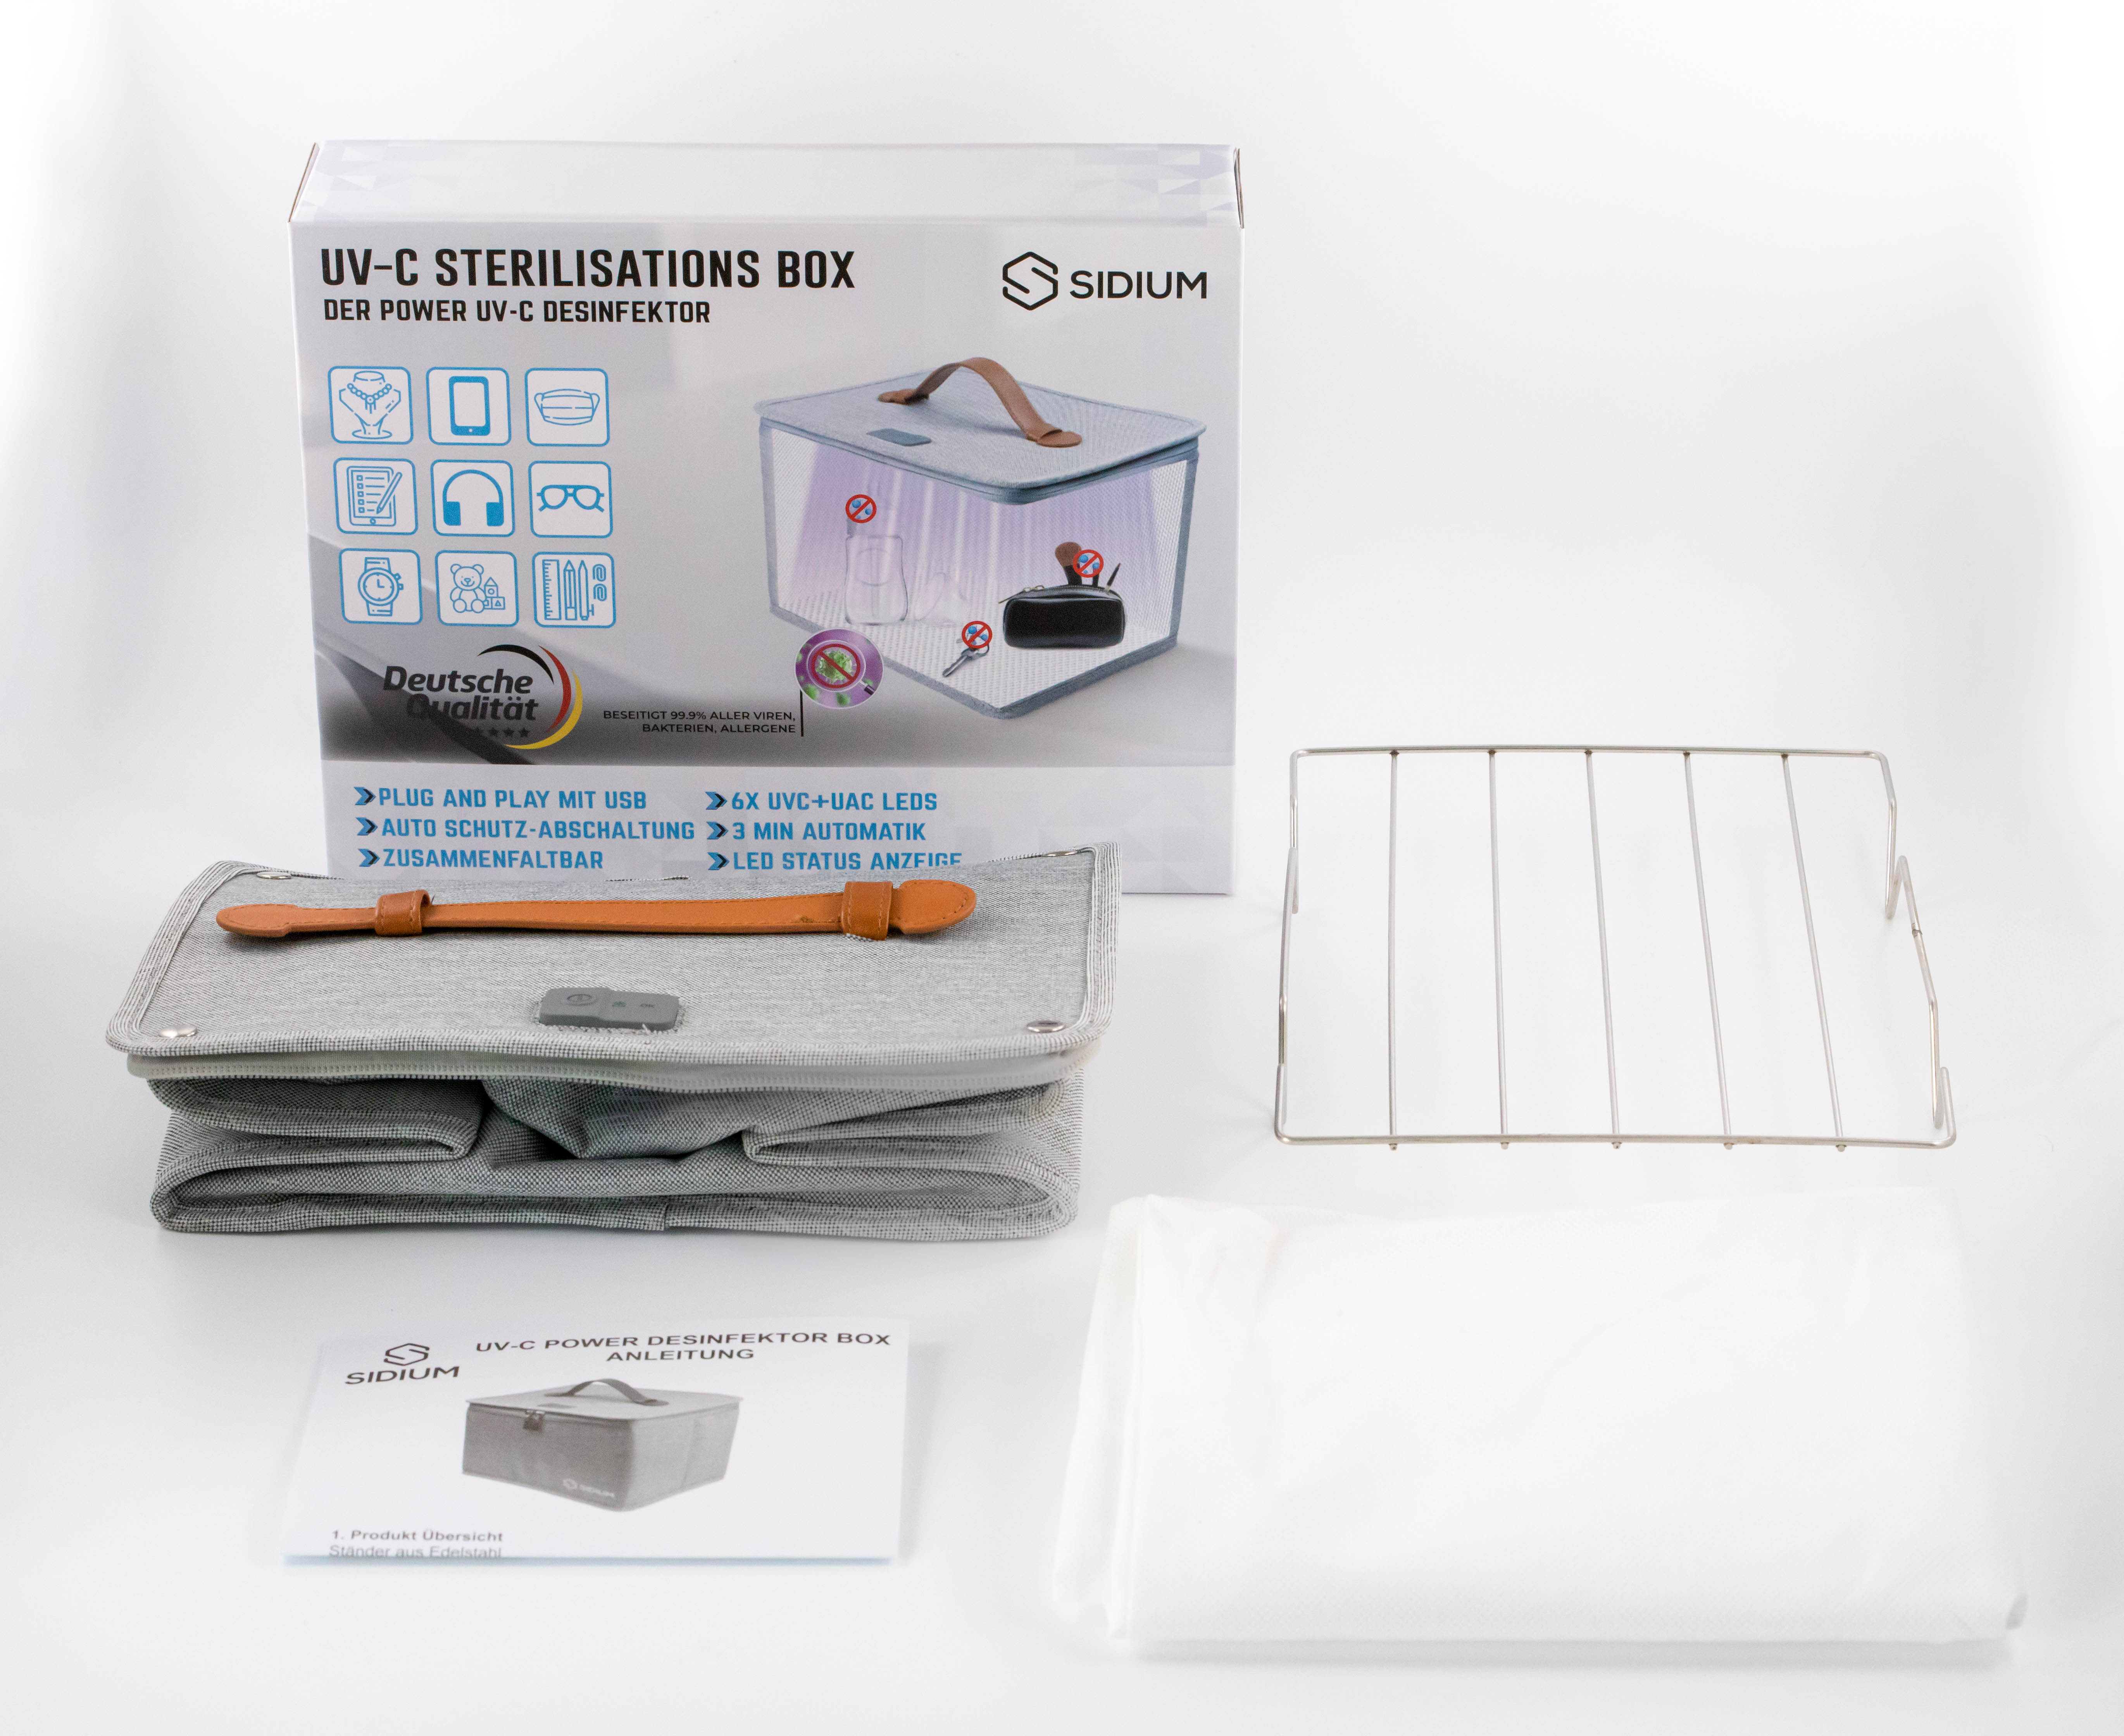 SIDIUM POWER Sterilisator UV-C DESINFEKTOR BOX